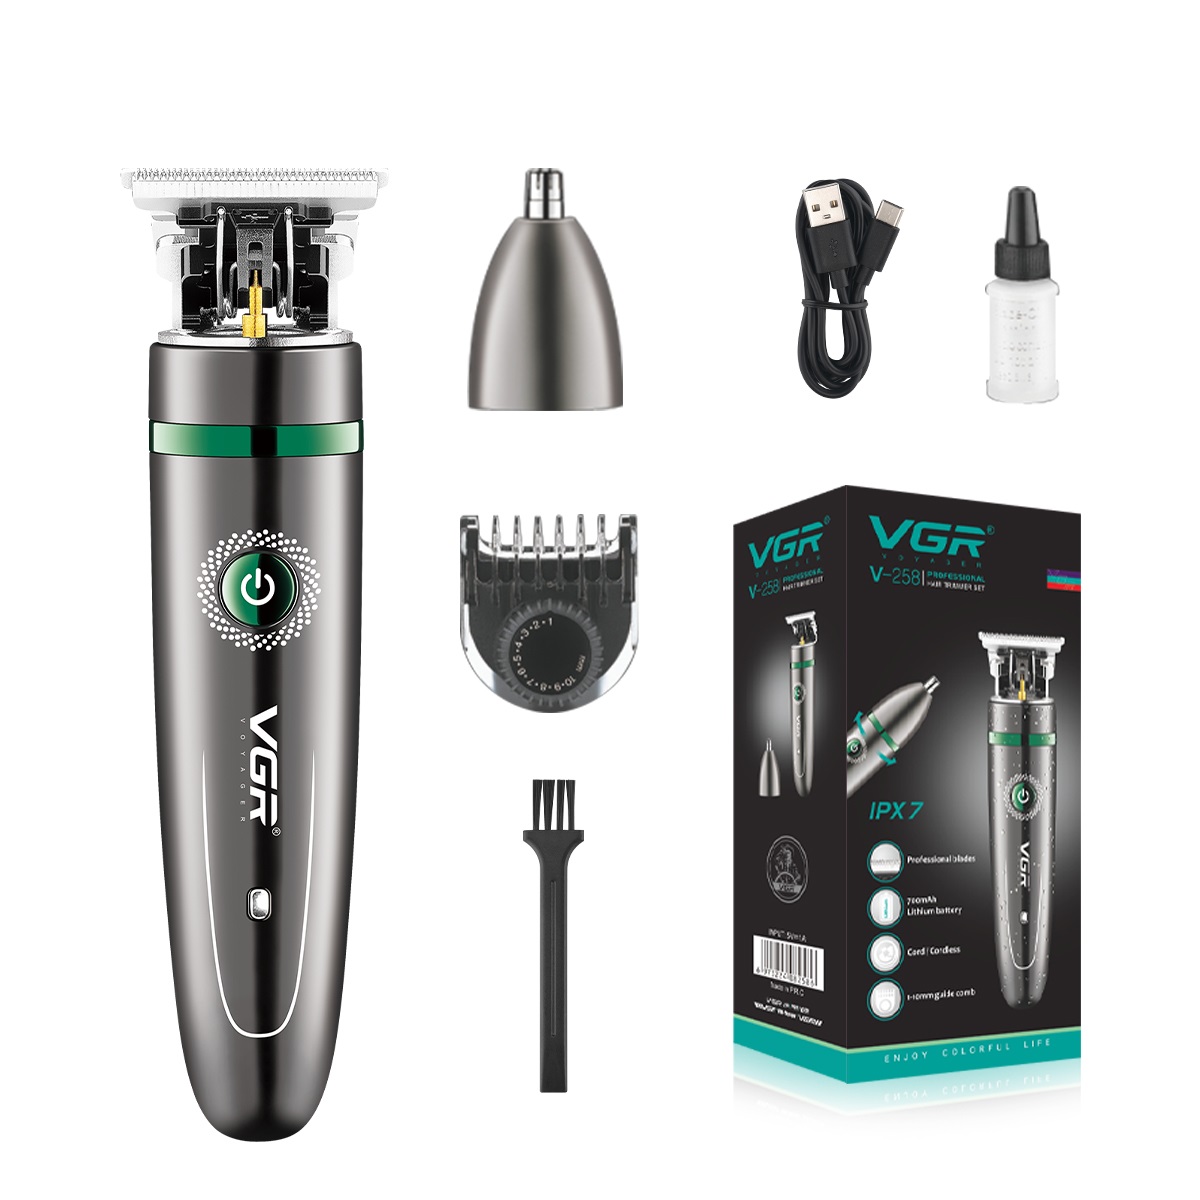 VGR V-258 2 in 1 waterproof grooming kit electric nose trimmer professional cordless hair trimmer set for men1